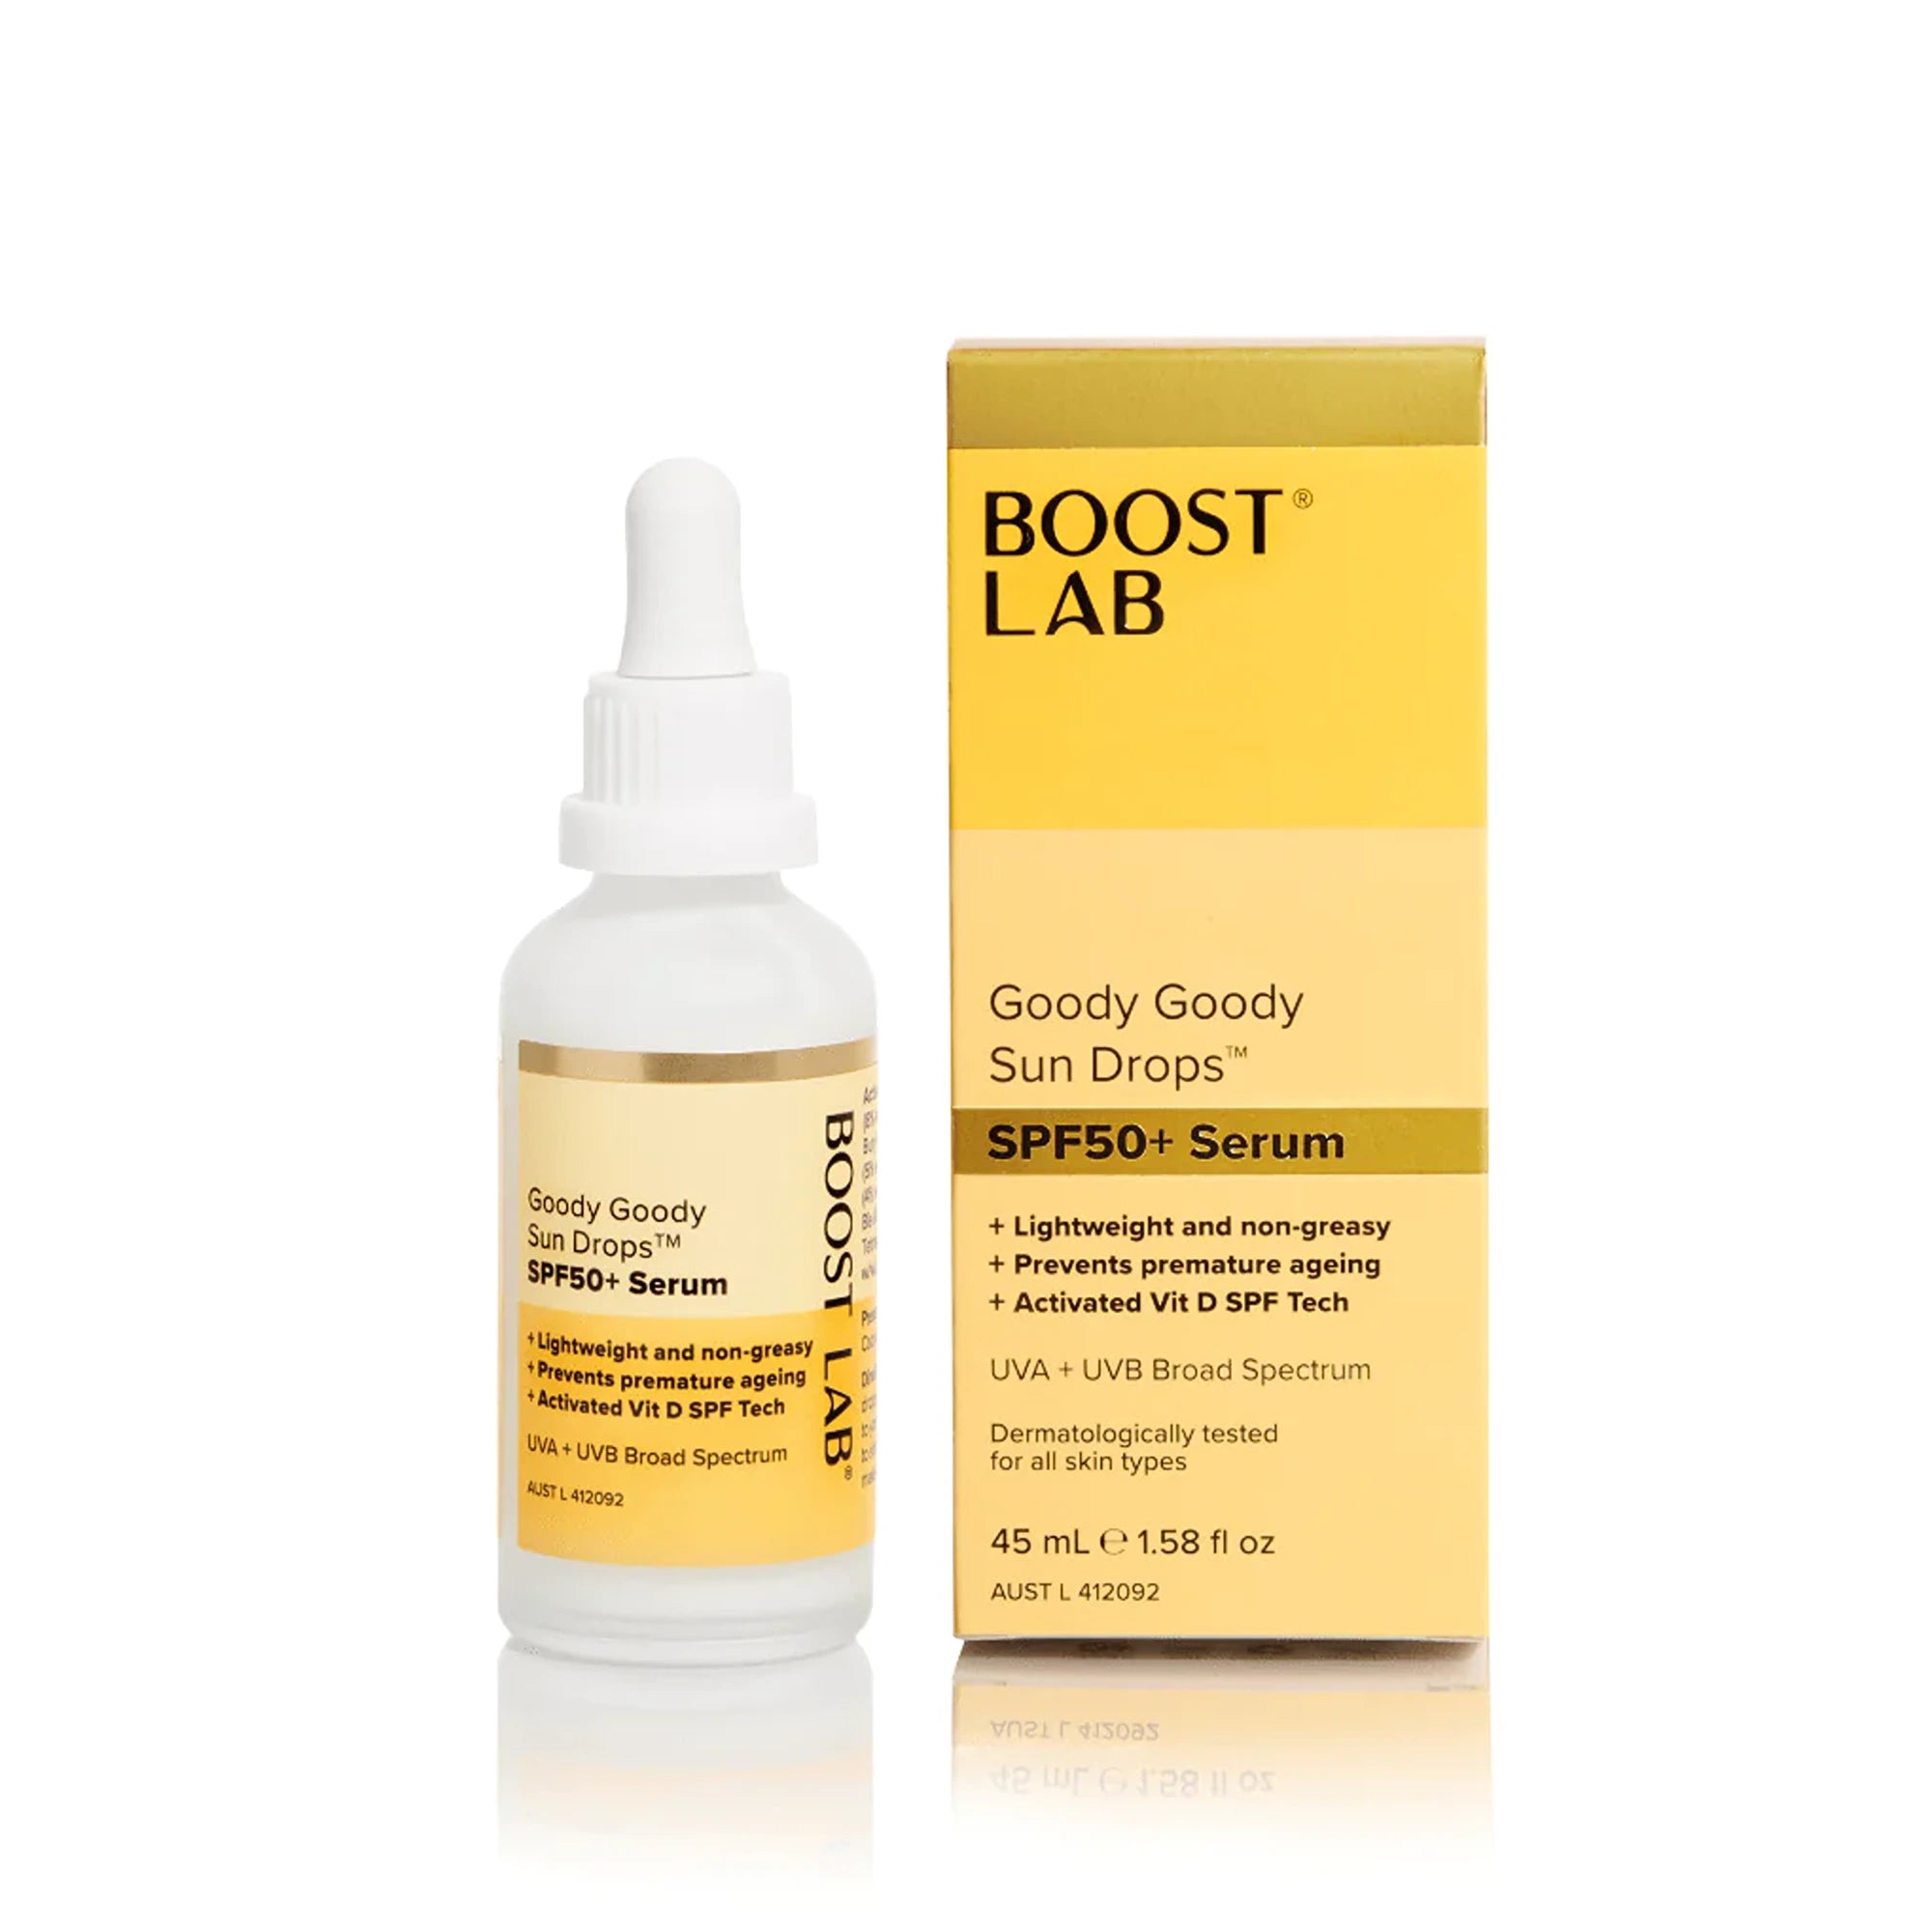 Boost Lab Goody Goody Sun Drops SPF50+ Serum 45mL